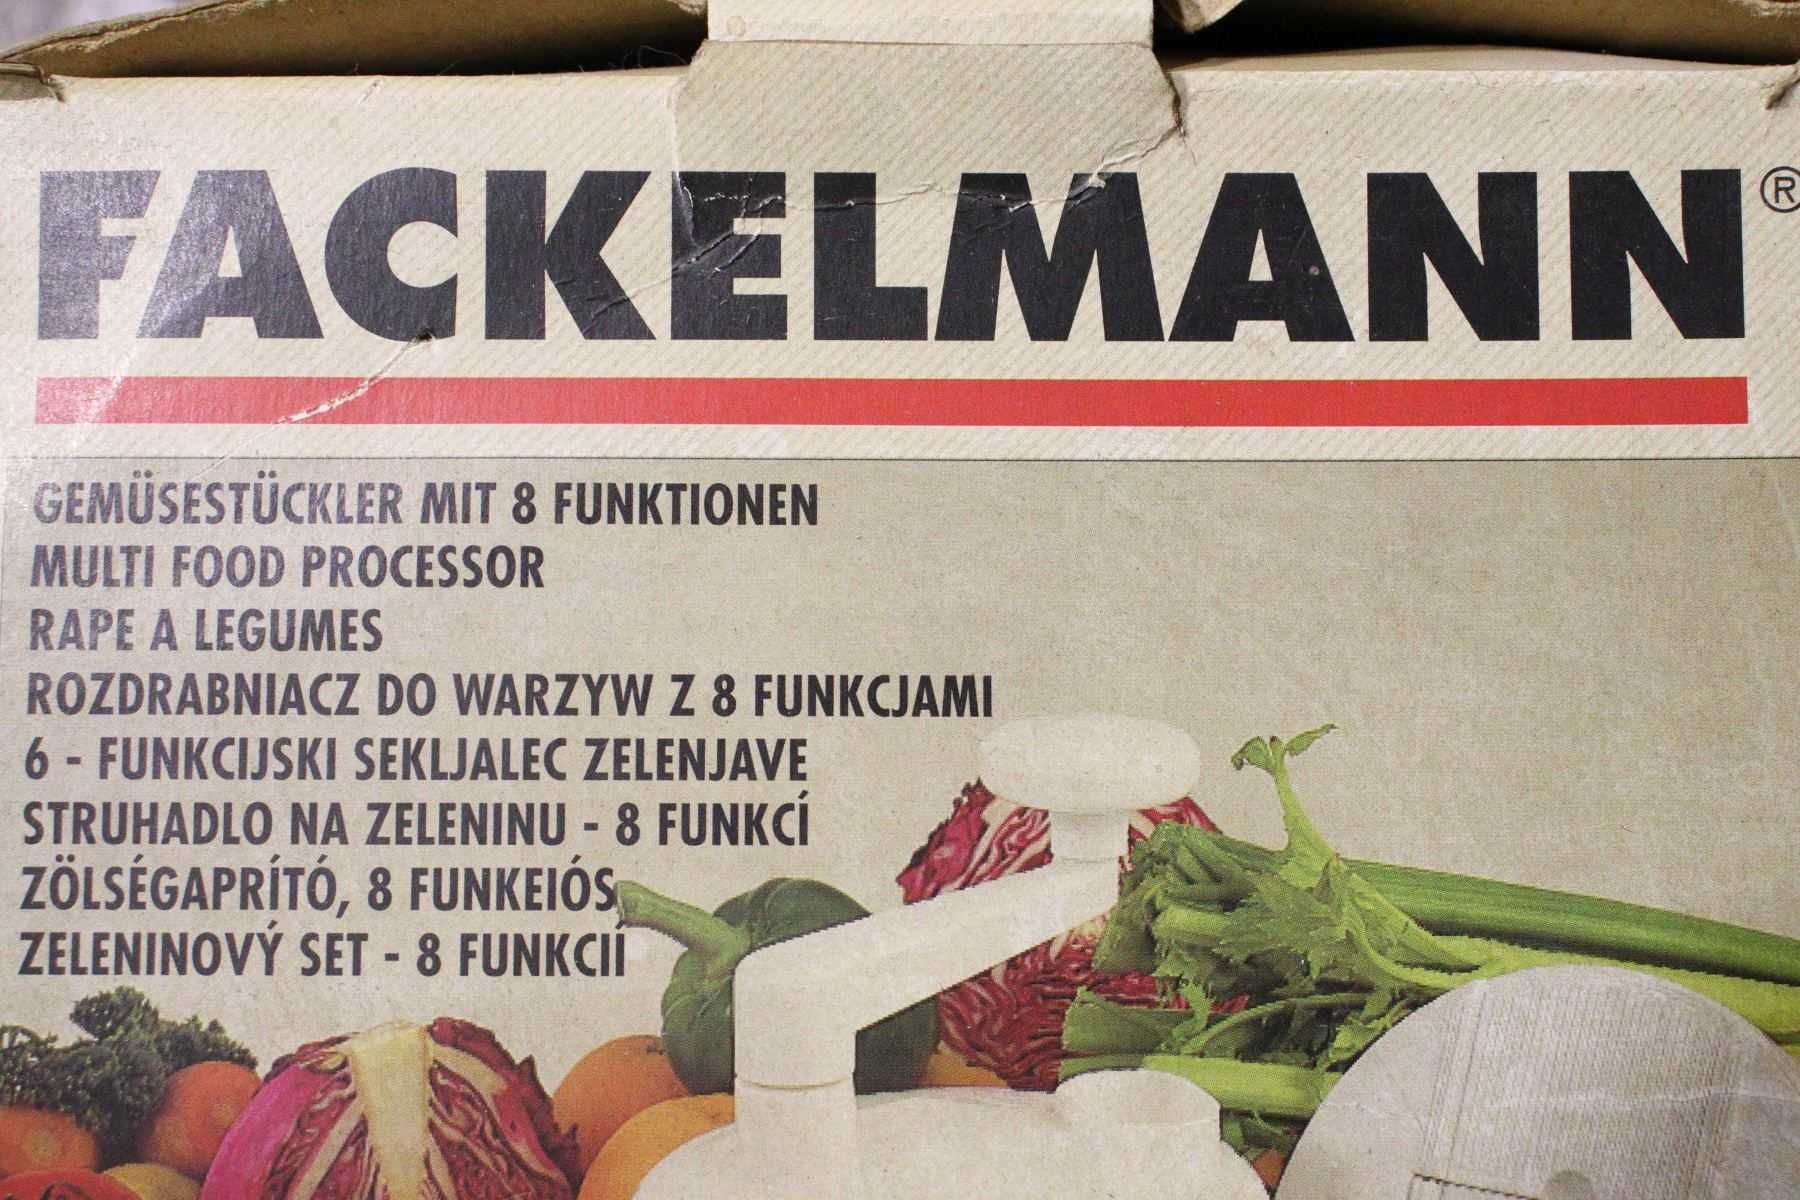 Овощерезка с 8-ю функциями, немецкое предприятие Fackelmann